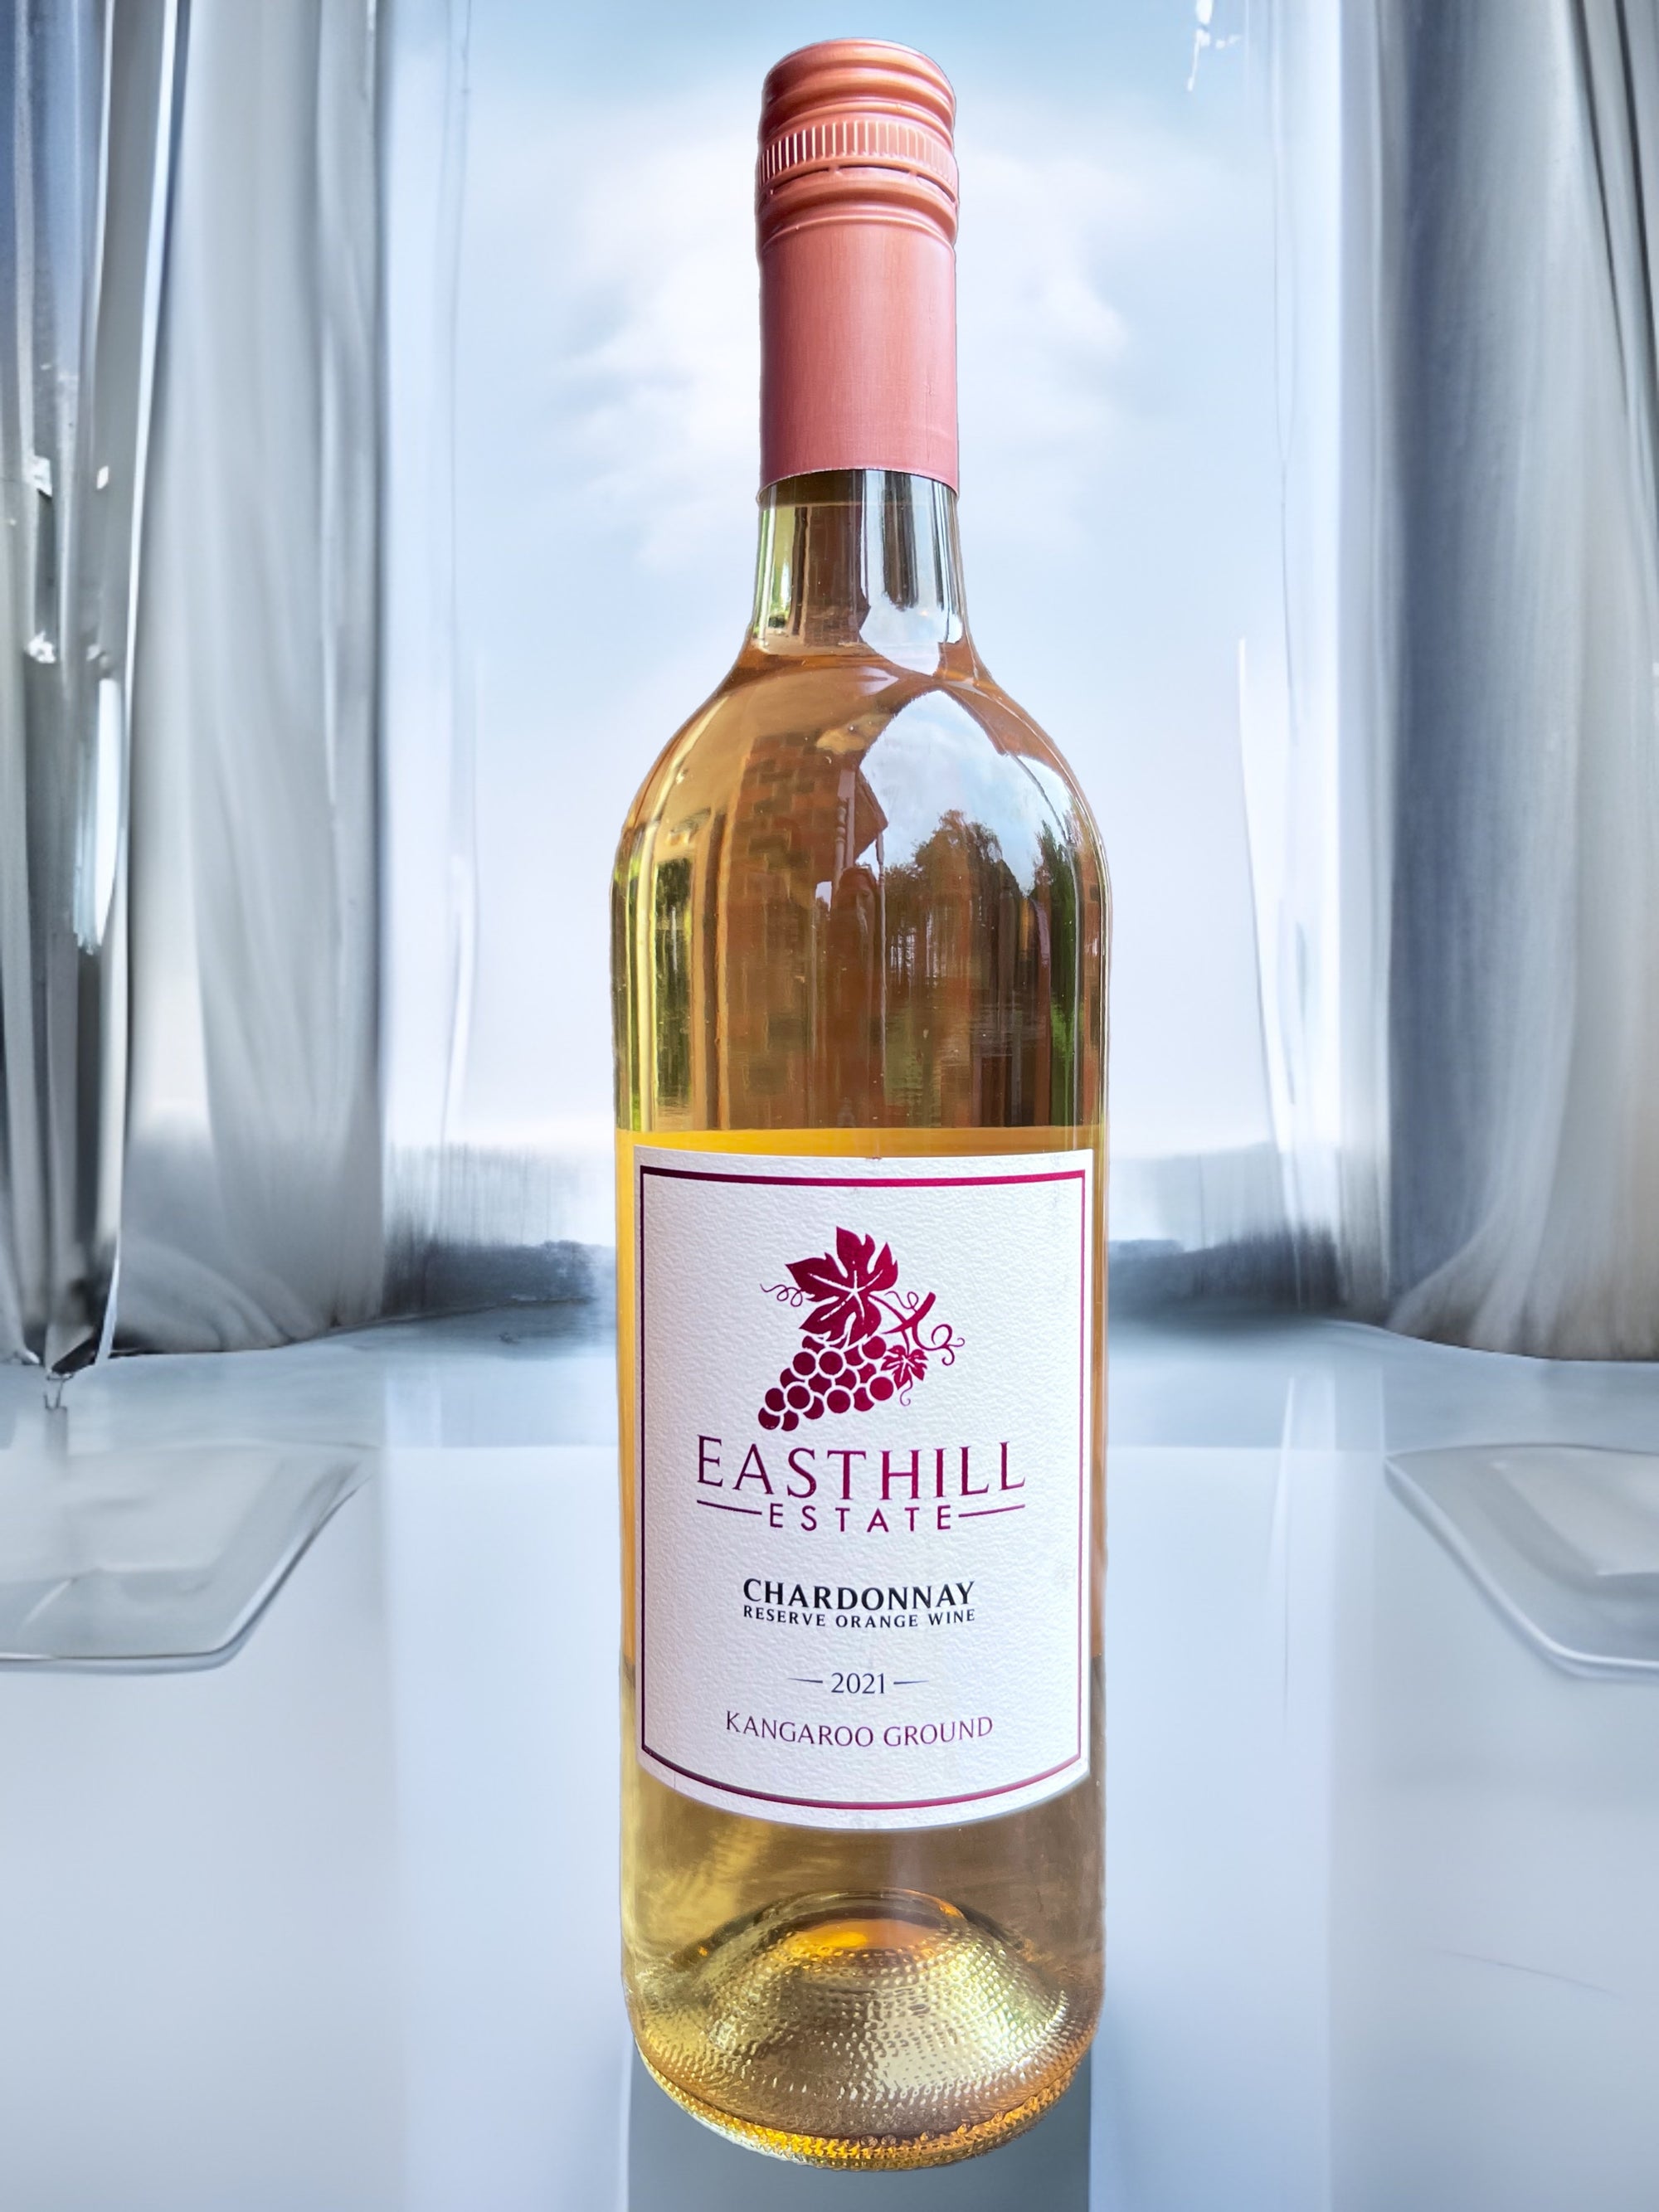 Easthill Estate Chardonnay Reserve Orange Wine 2021